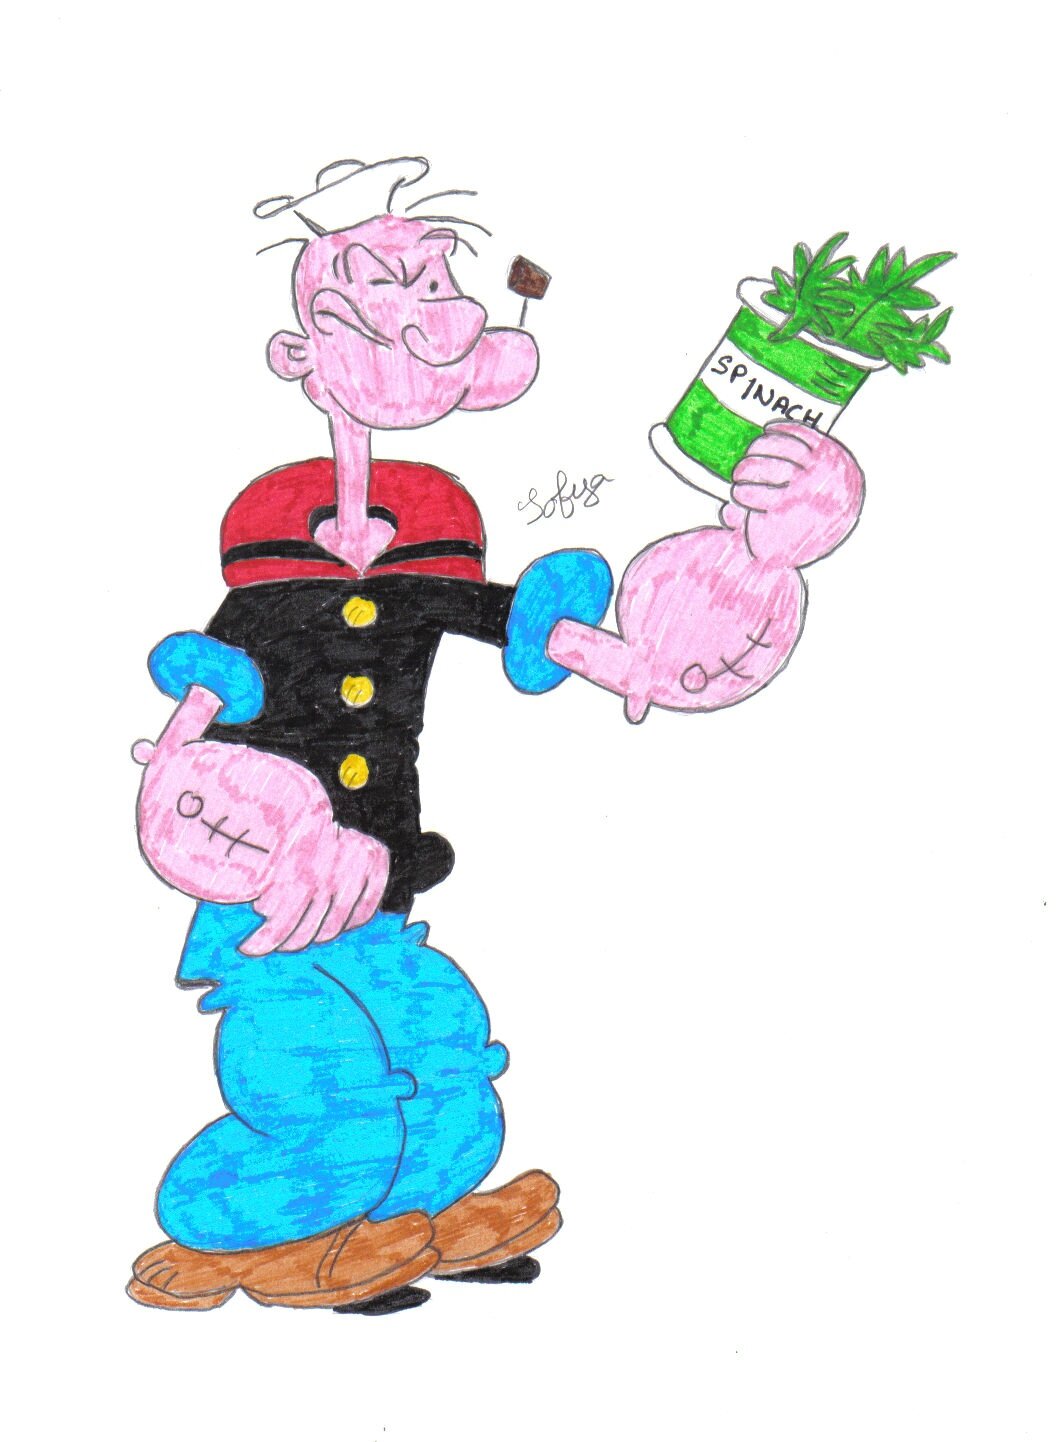 462) Popeye